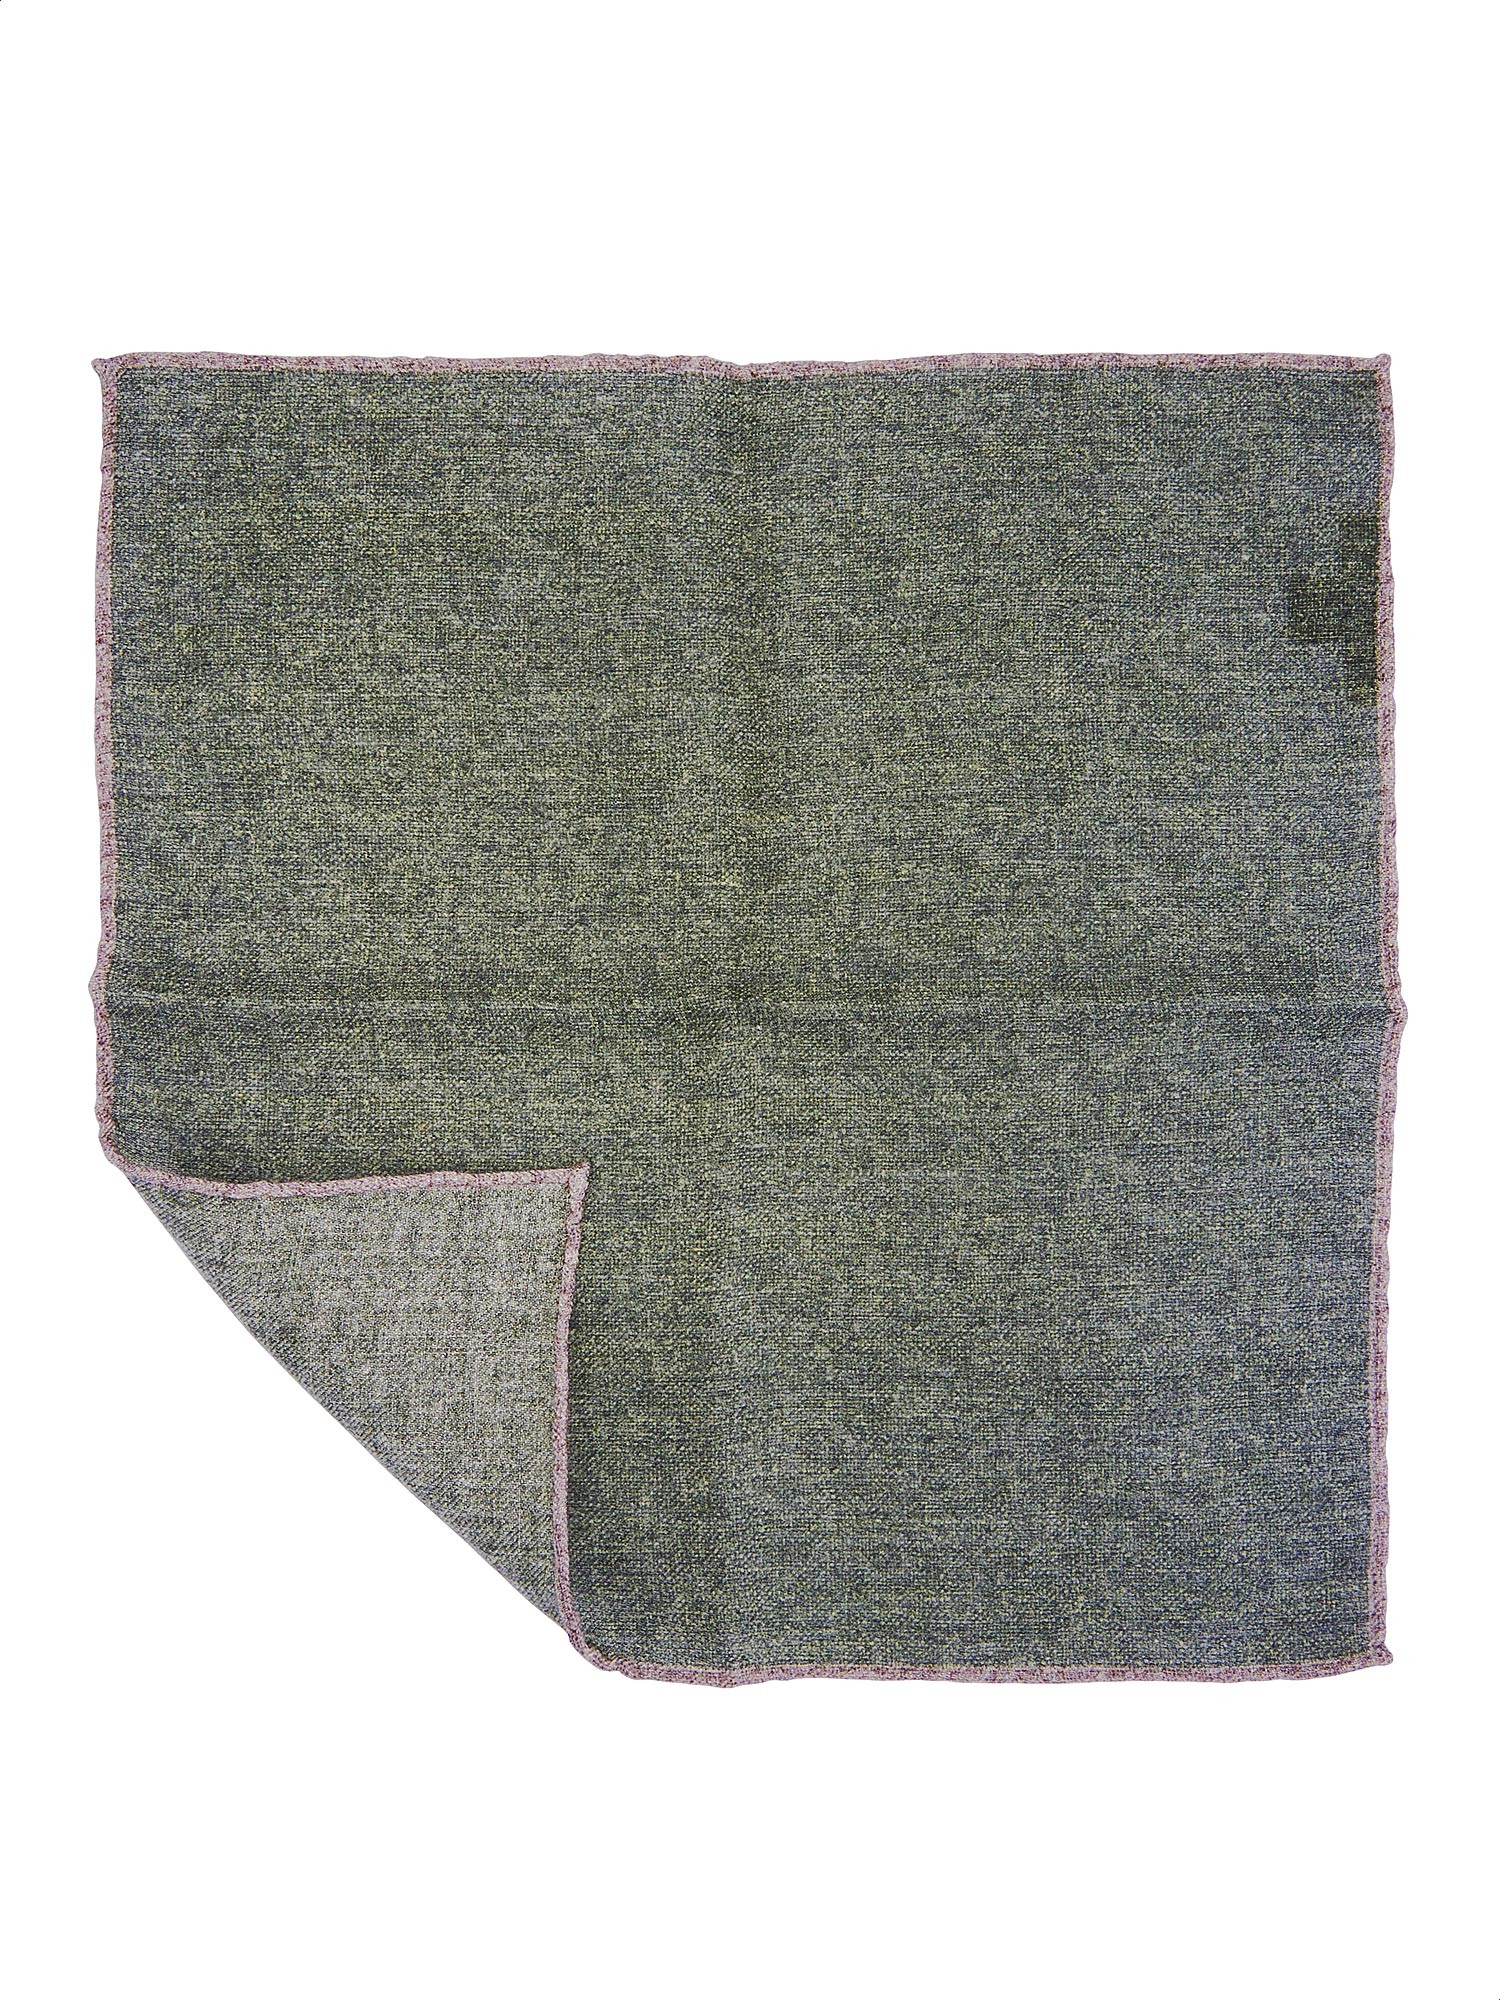 Green wool Italian pocket handkerchief by Rosi Collection